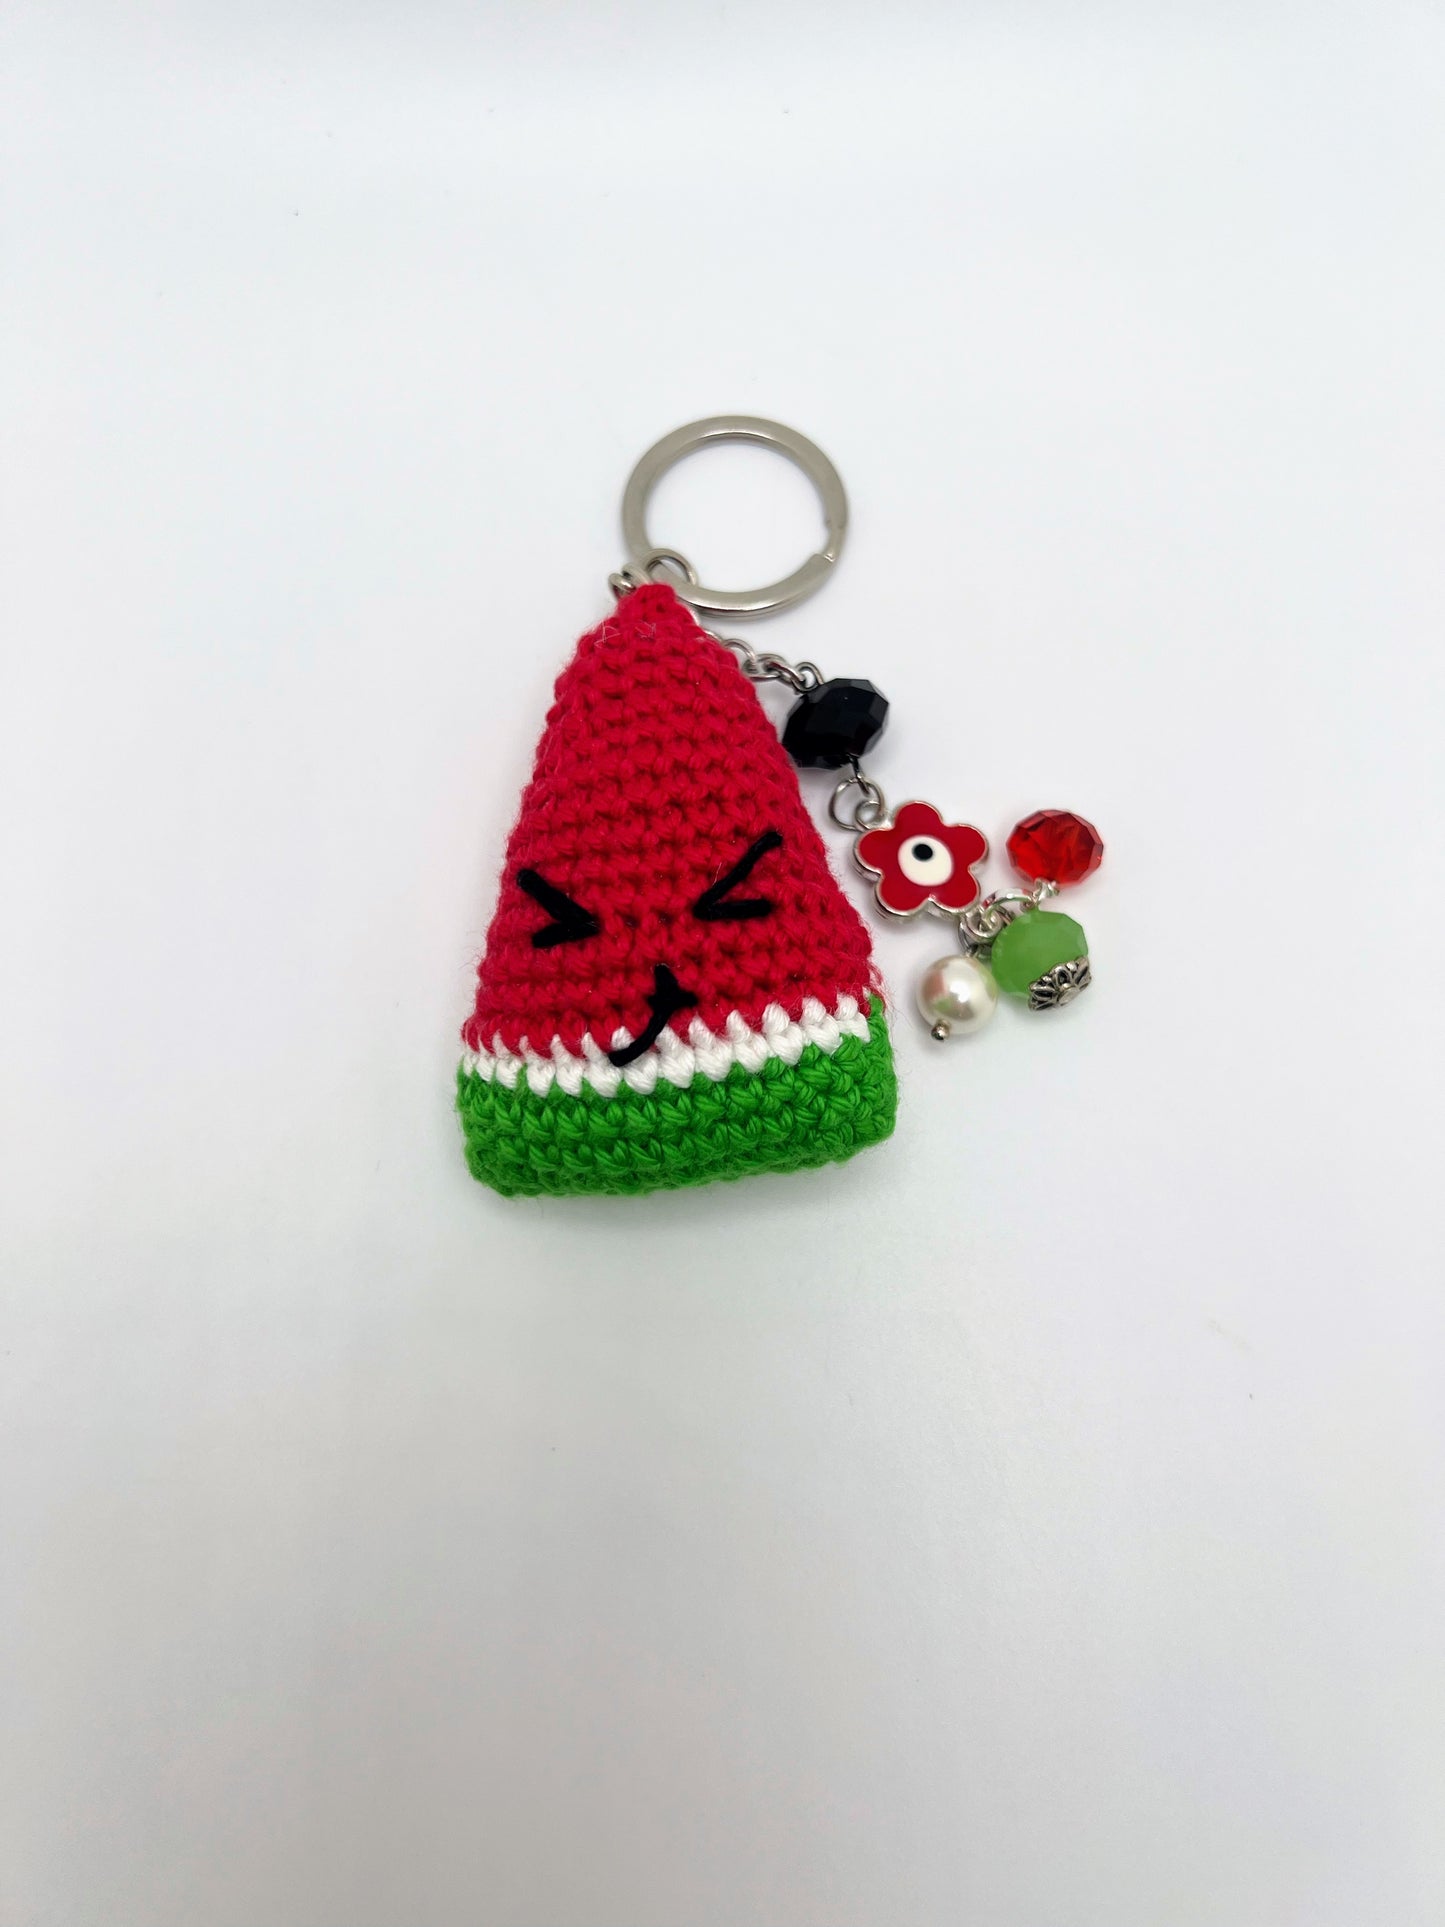 Small Slice Watermelon 🍉 Keychain - Crochet Knitted Amigurumi Toy